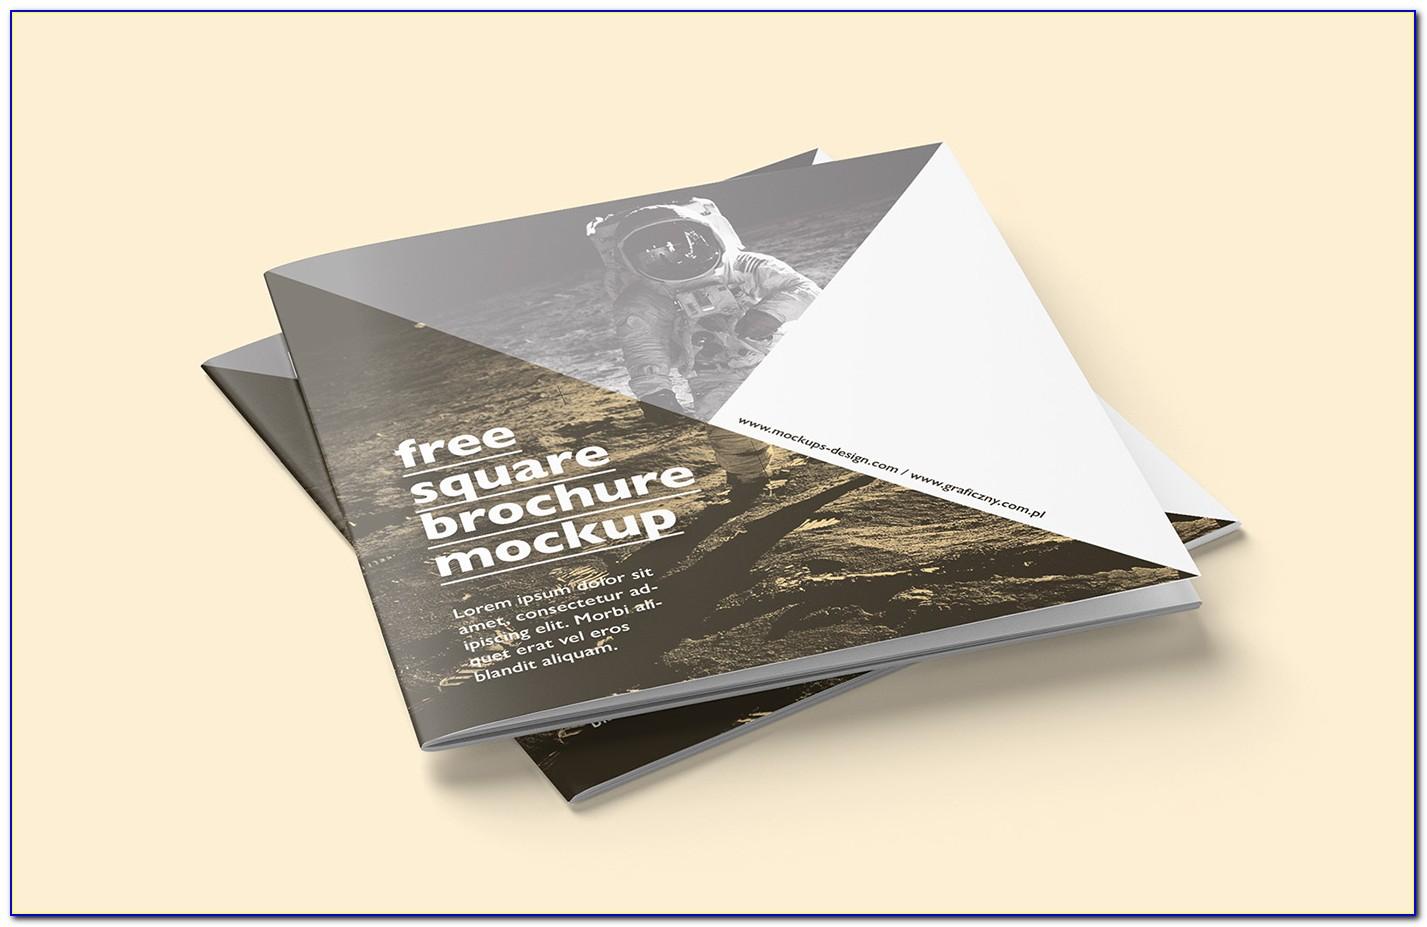 Square Brochure Mockup Free Download